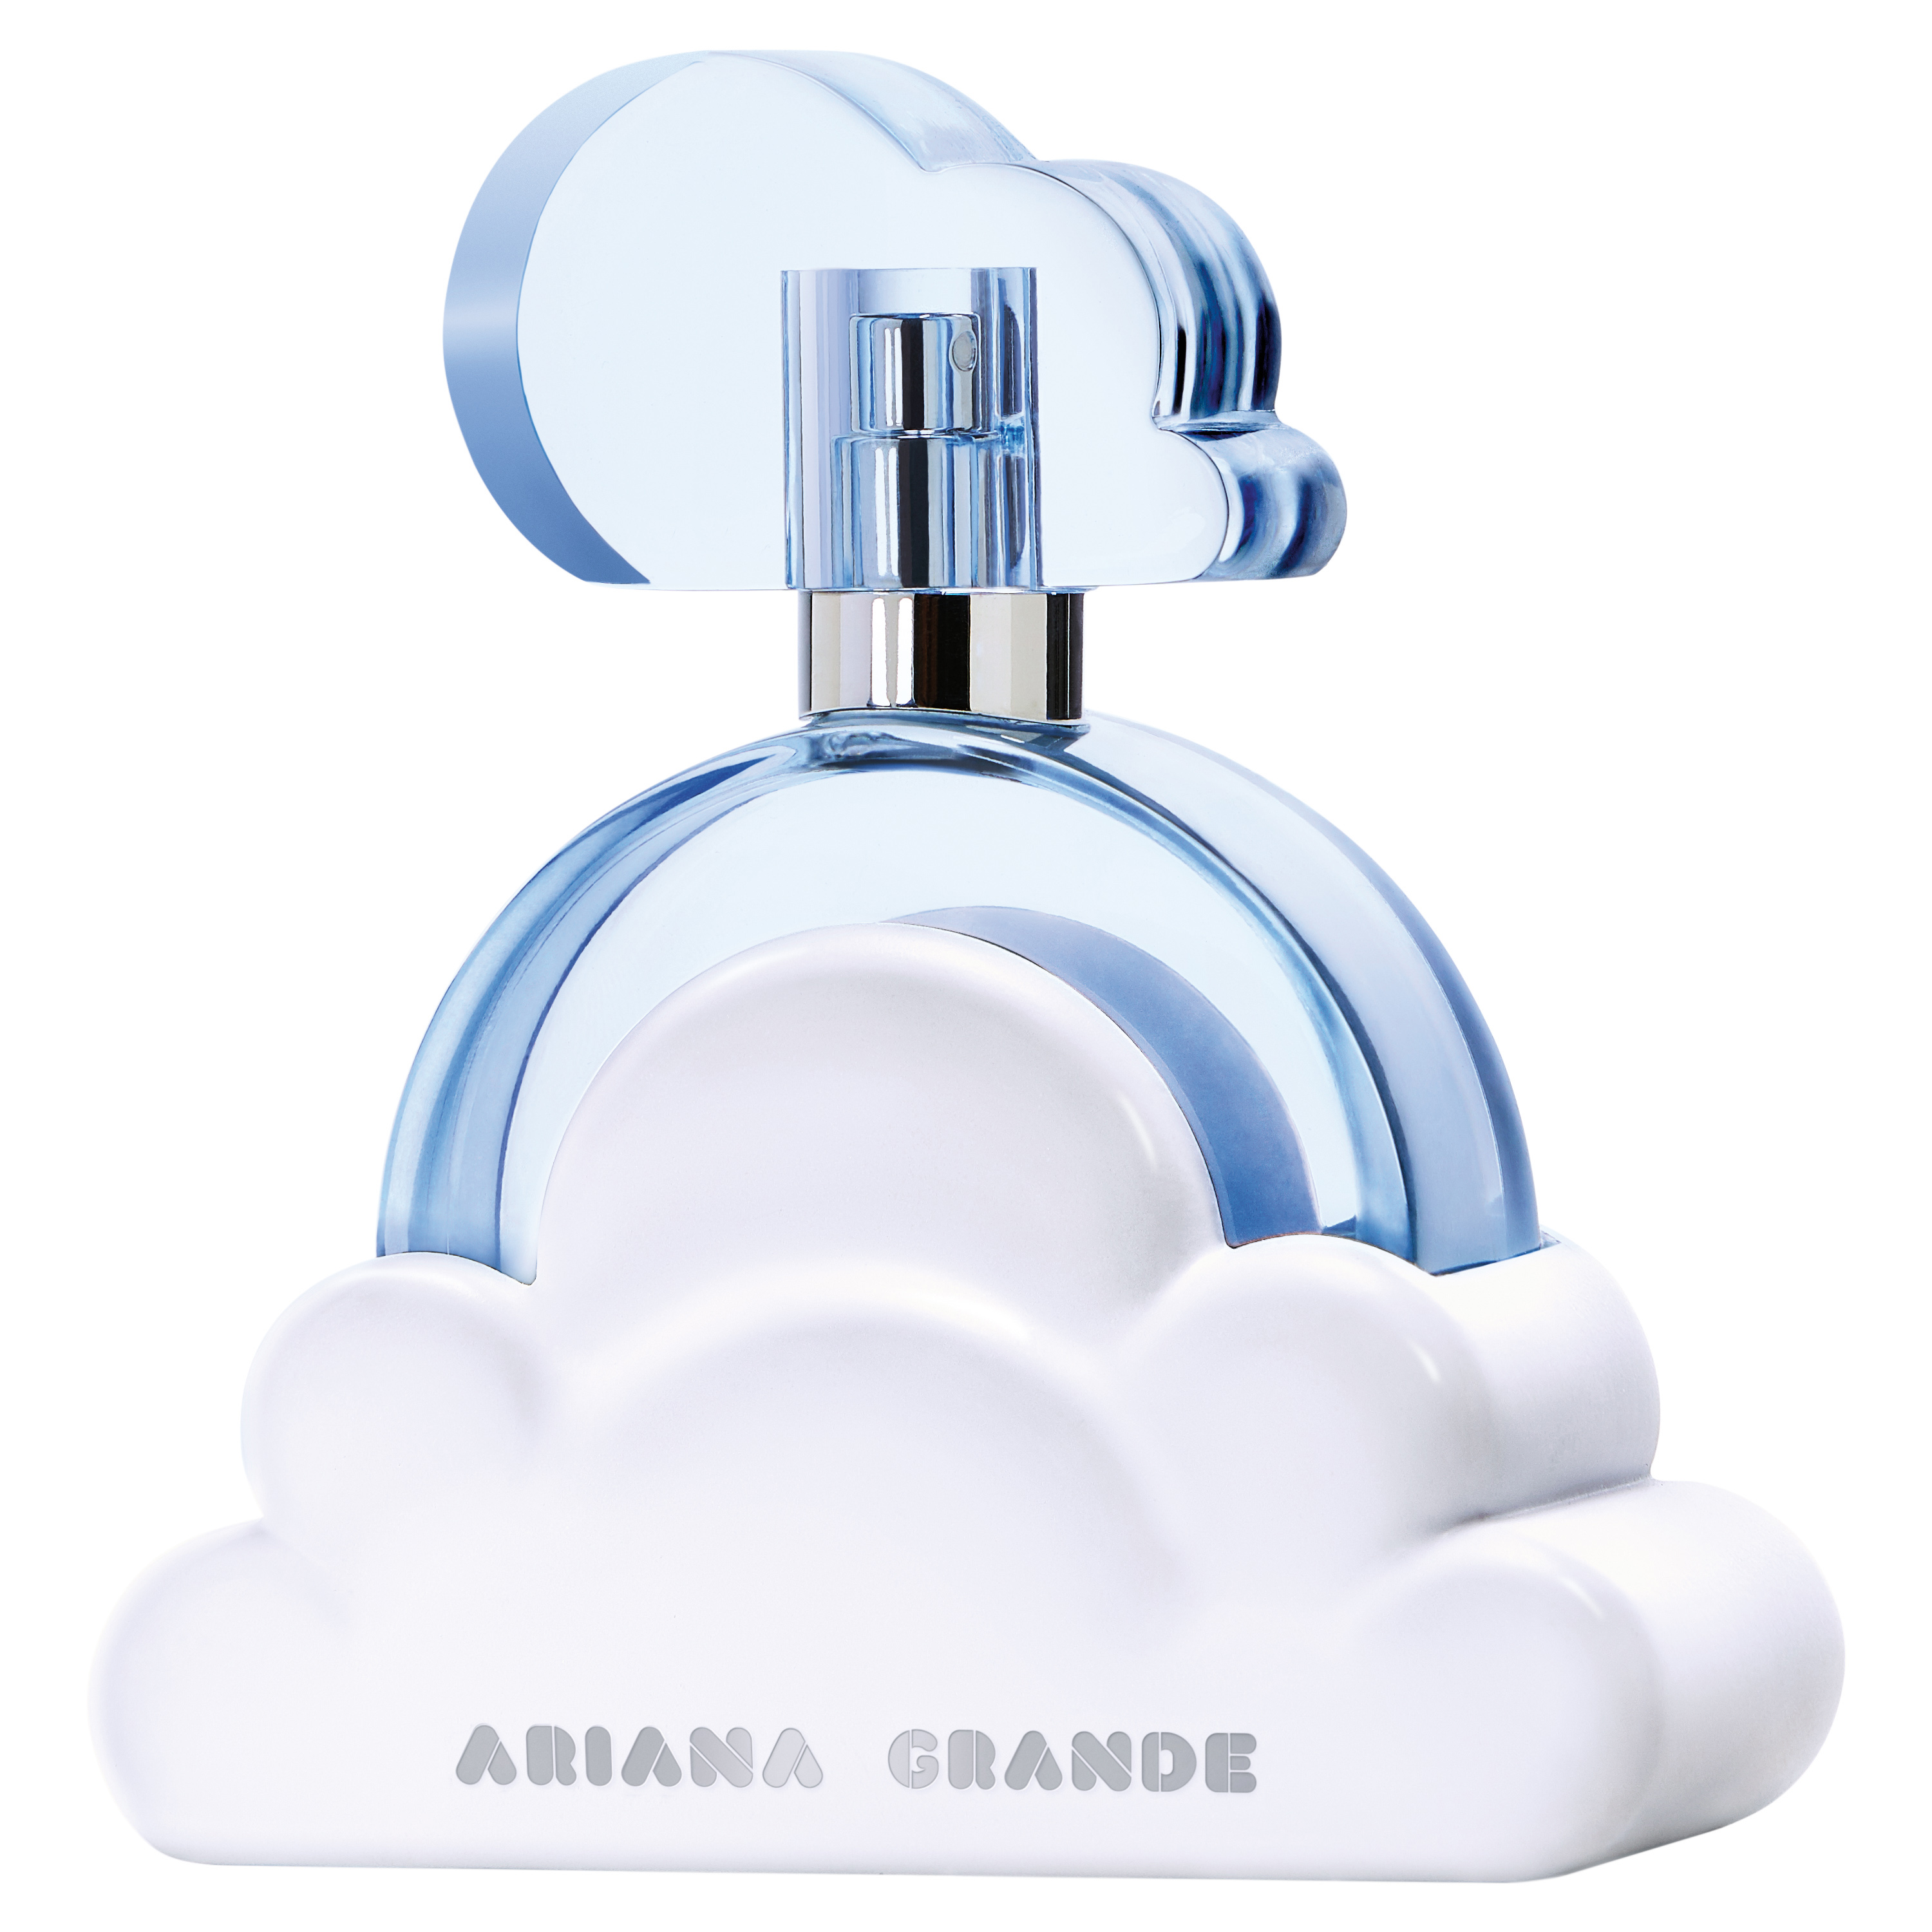 Ariana Grande Cloud Eau De Parfum, Perfume for Women, 3.4 oz - image 1 of 3